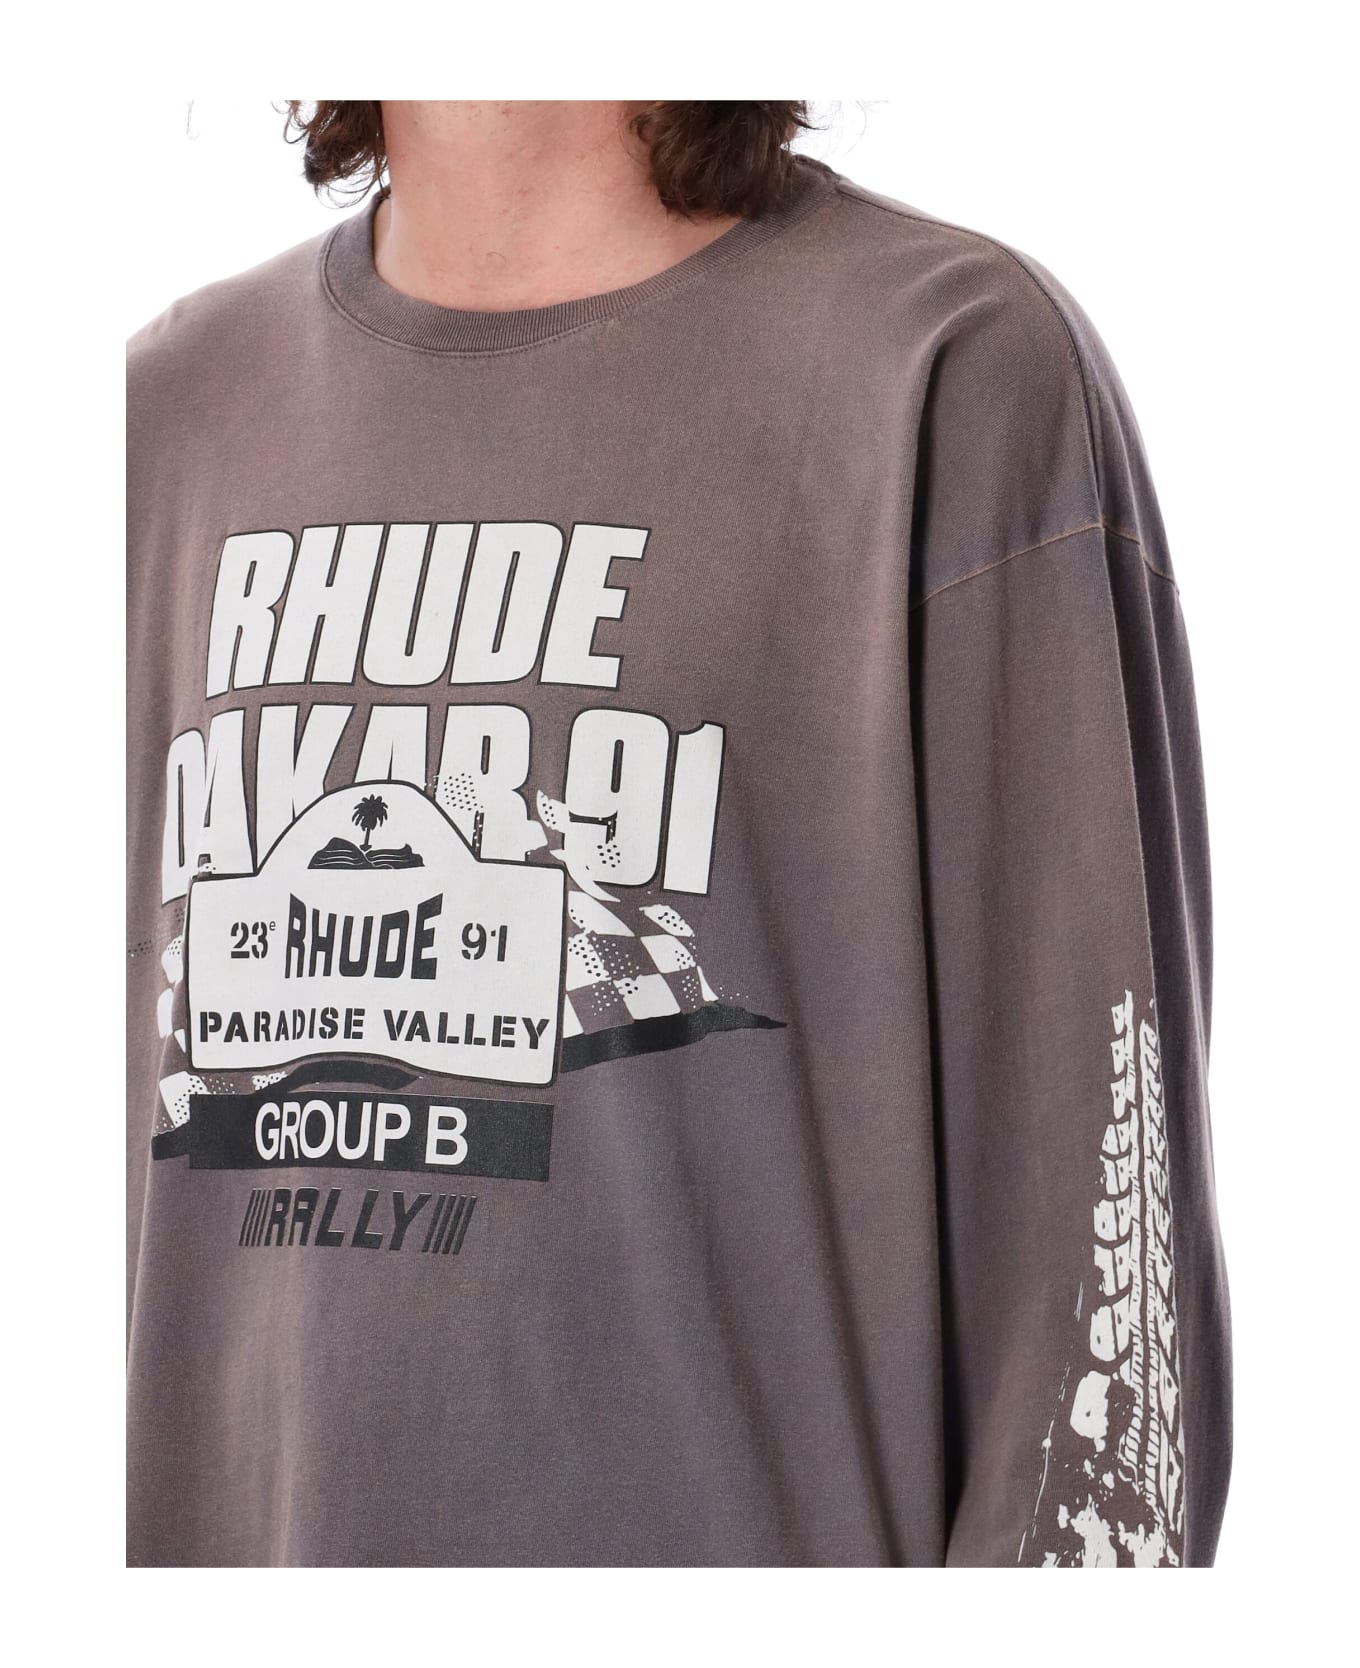 Rhude Dakar 91 Long-sleeved T-shirt - VINTAGE GREY